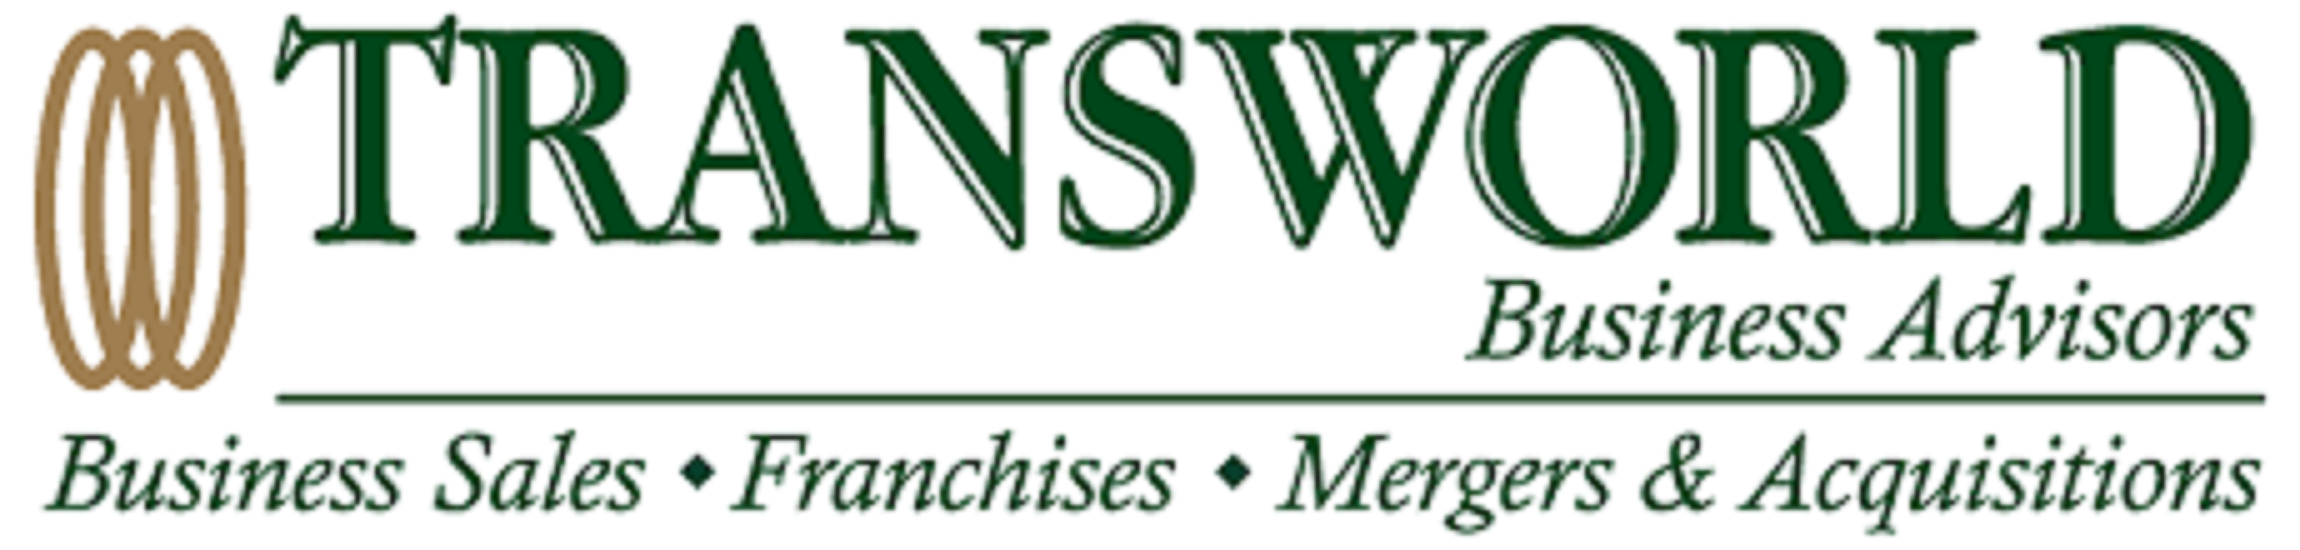 Transworld Business Advisors, LLC